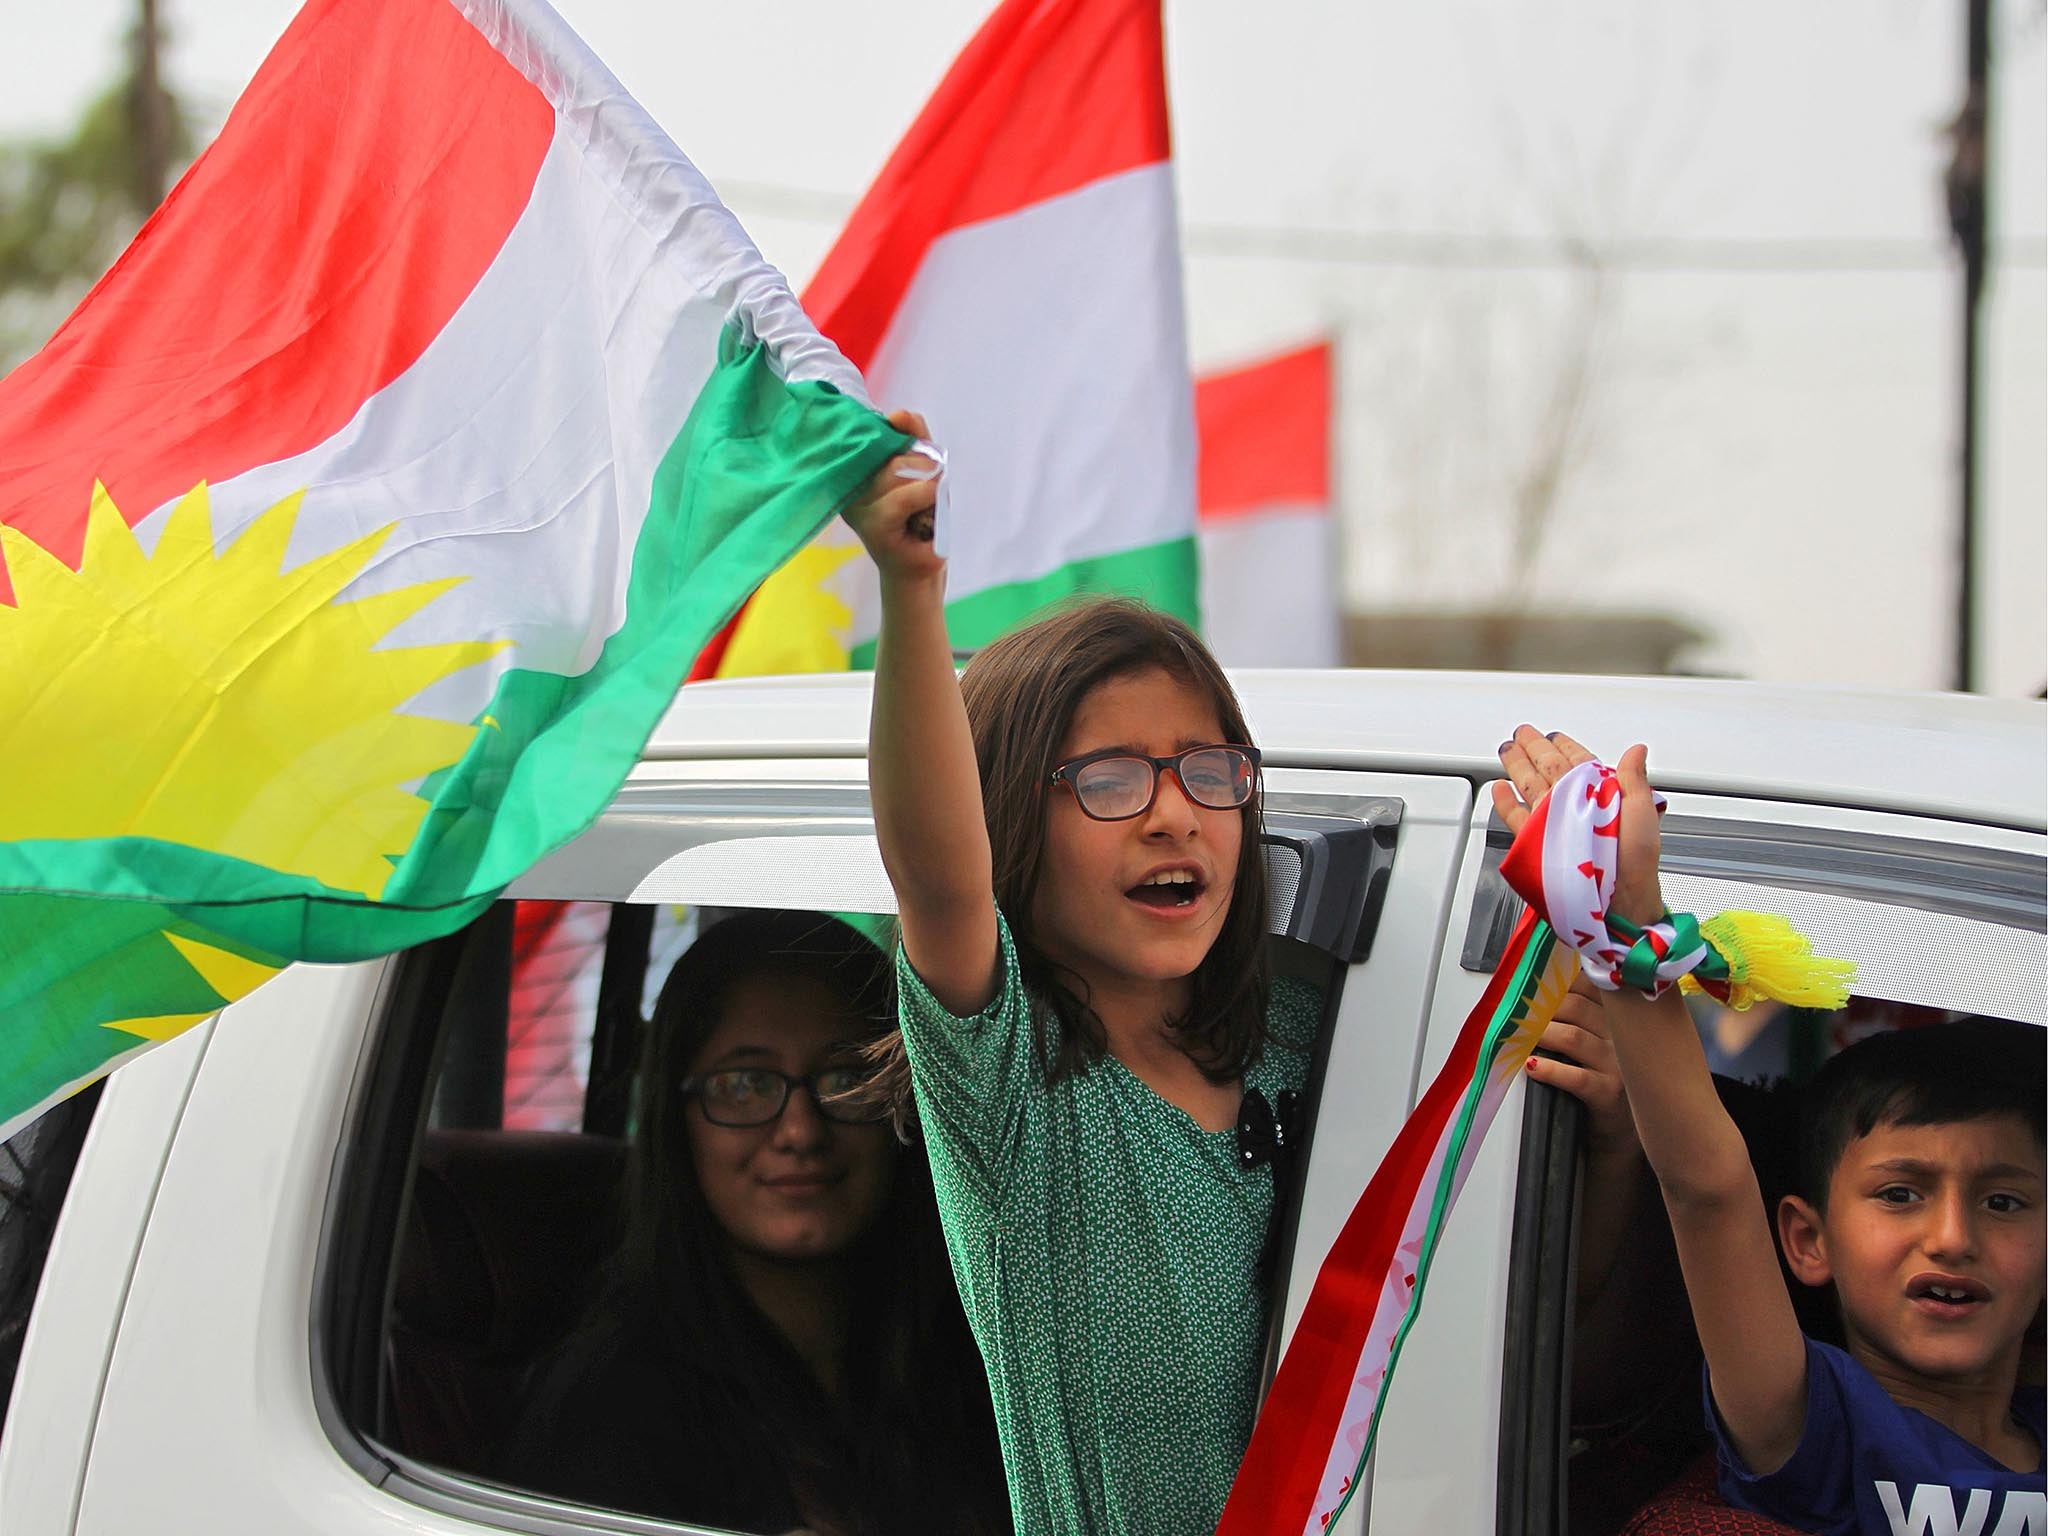 &#13;
Iraqi children wave Kurdish flags in Kirkuk, but the non-binding referendum has angered Baghdad and neighbours Turkey and Iran &#13;